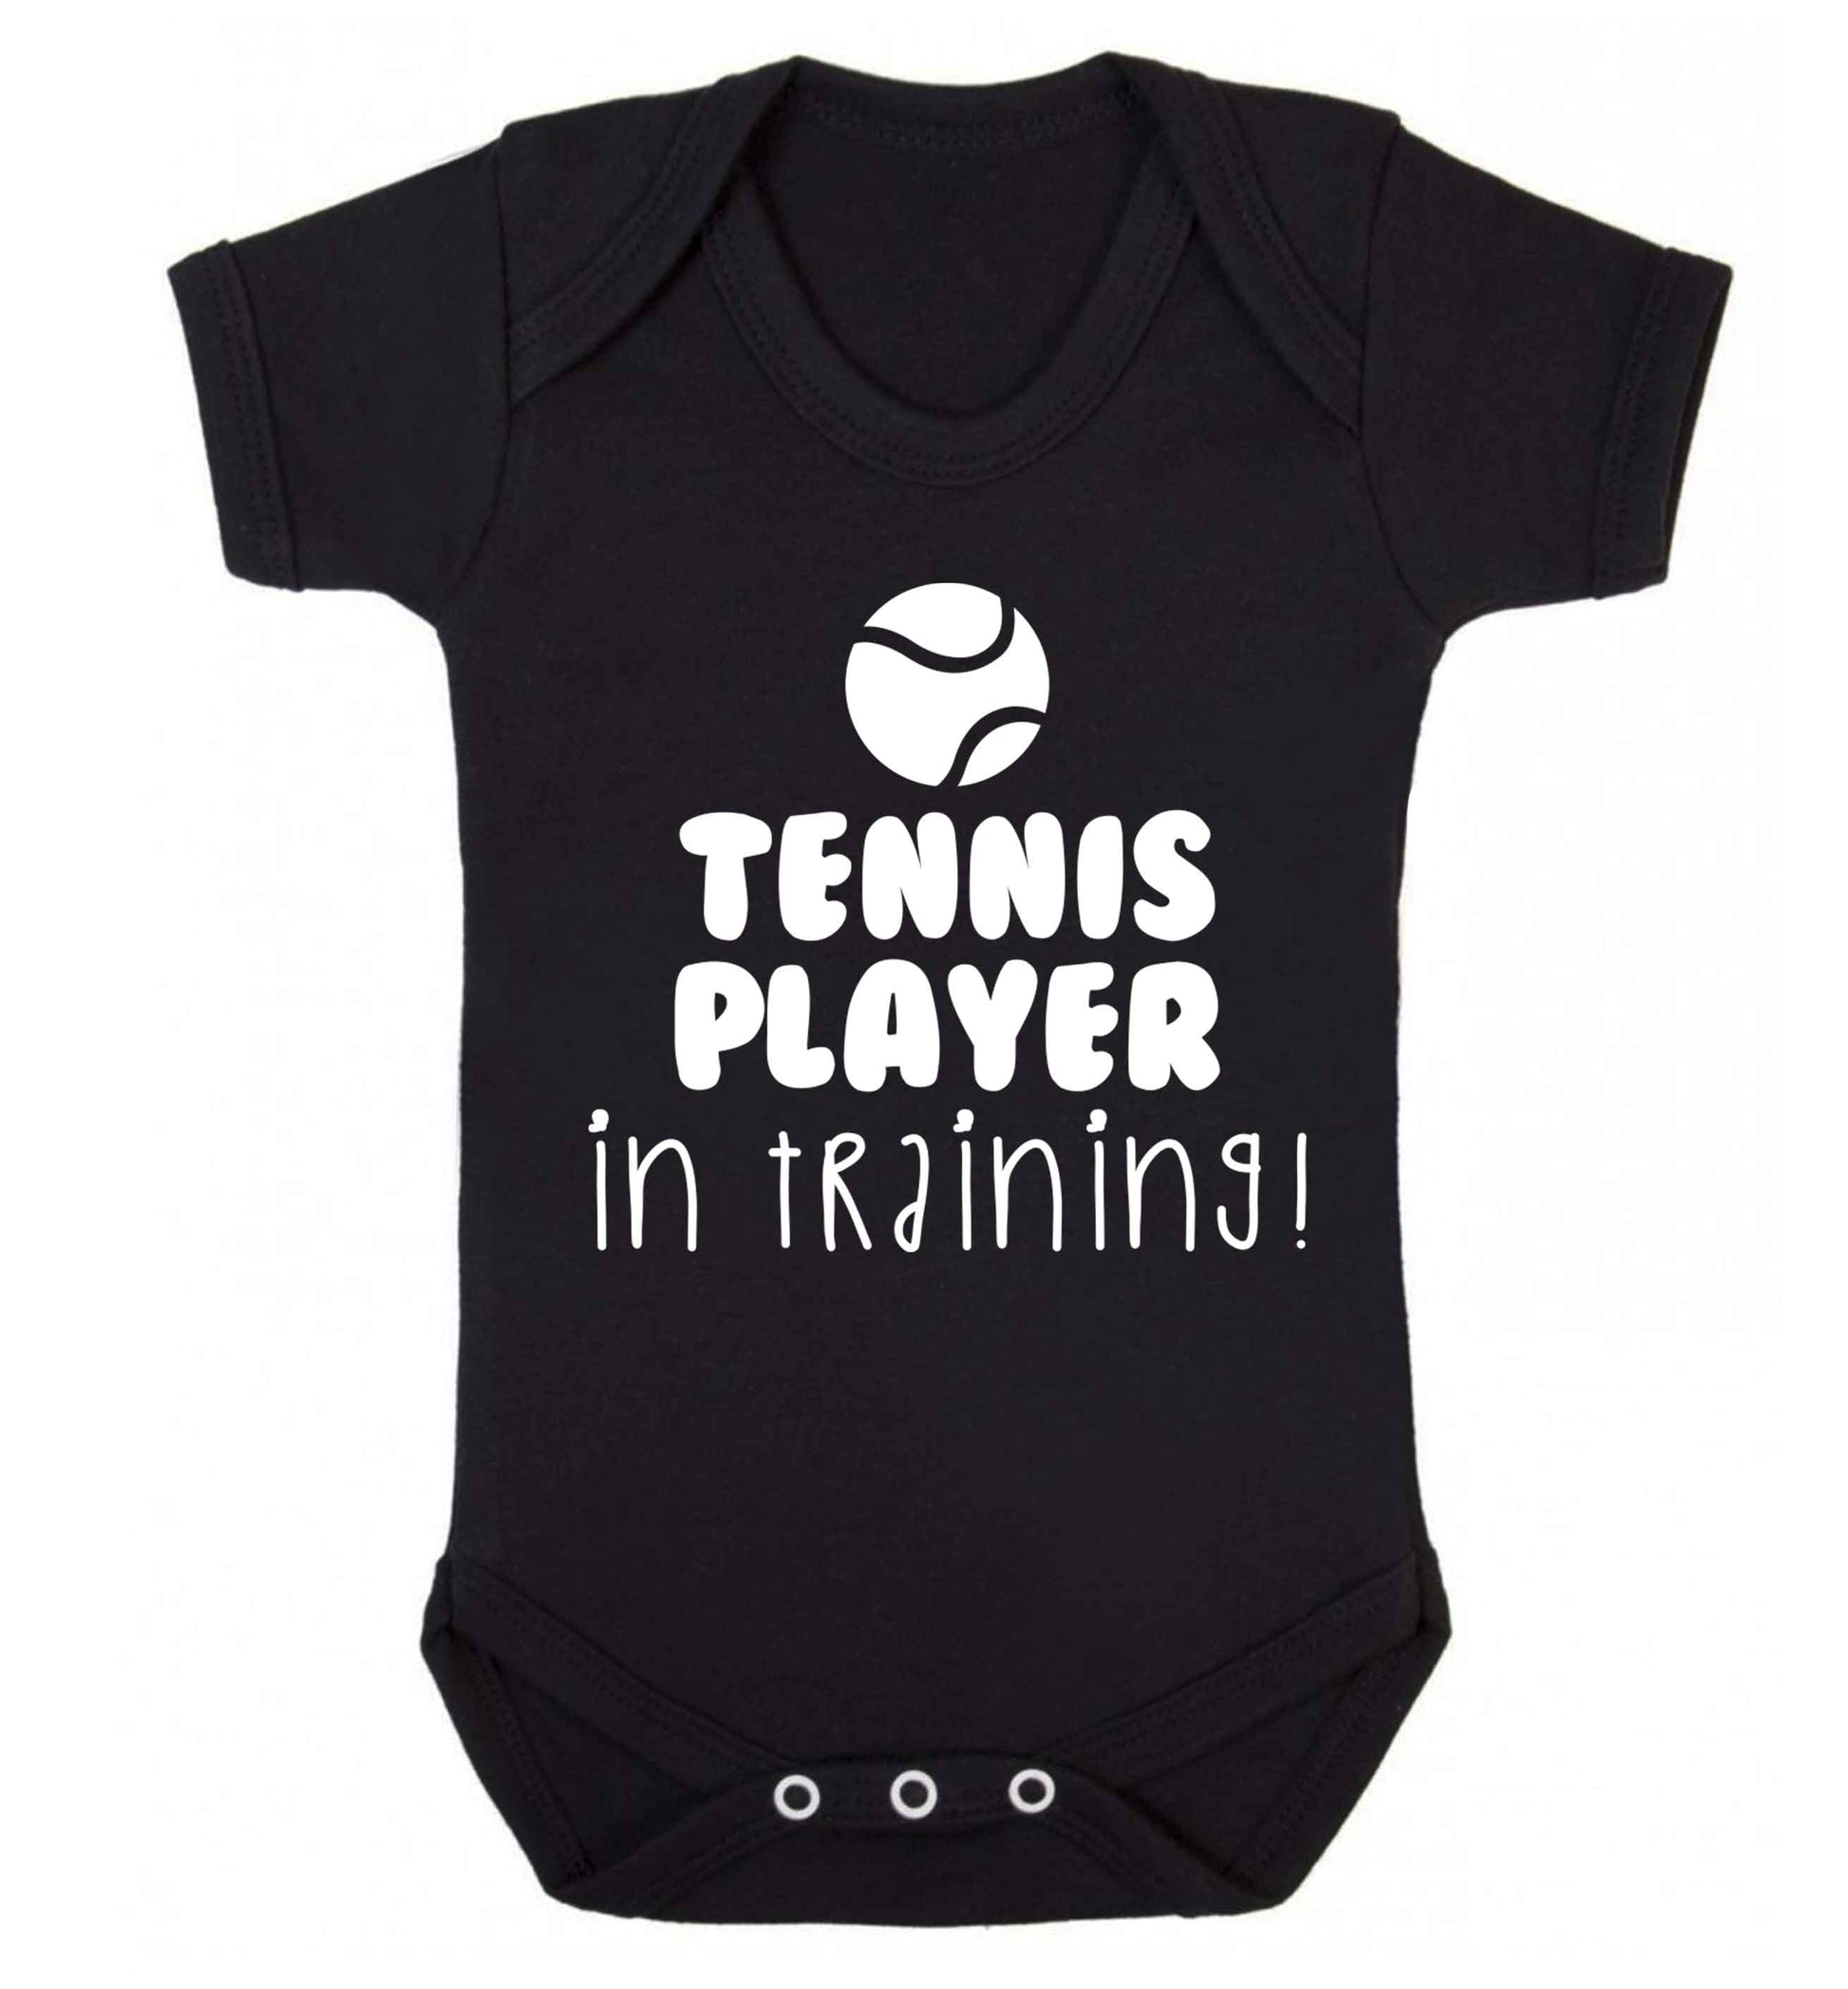 Tennis player in training Baby Vest black 18-24 months